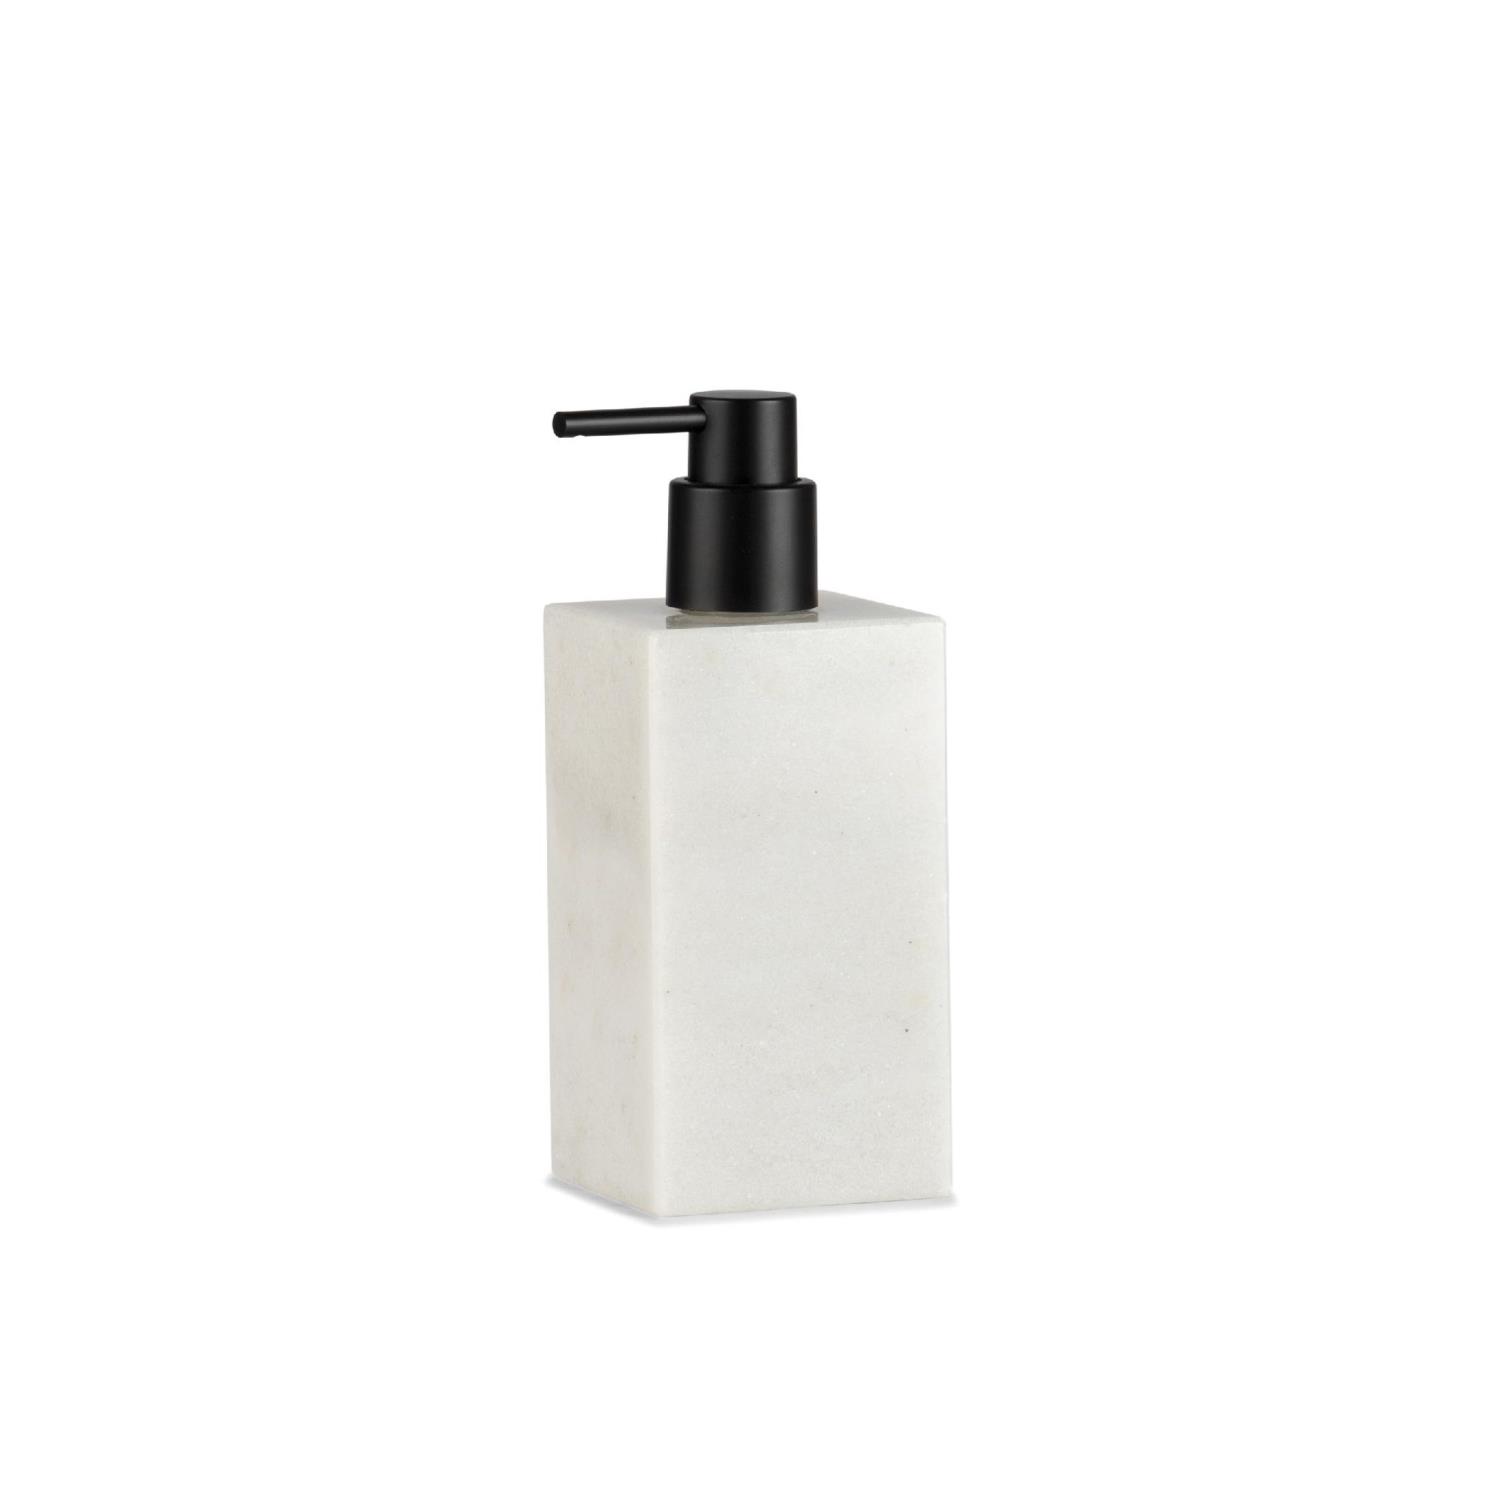 White Square Marble Soap Dispensor Black Top ba71164